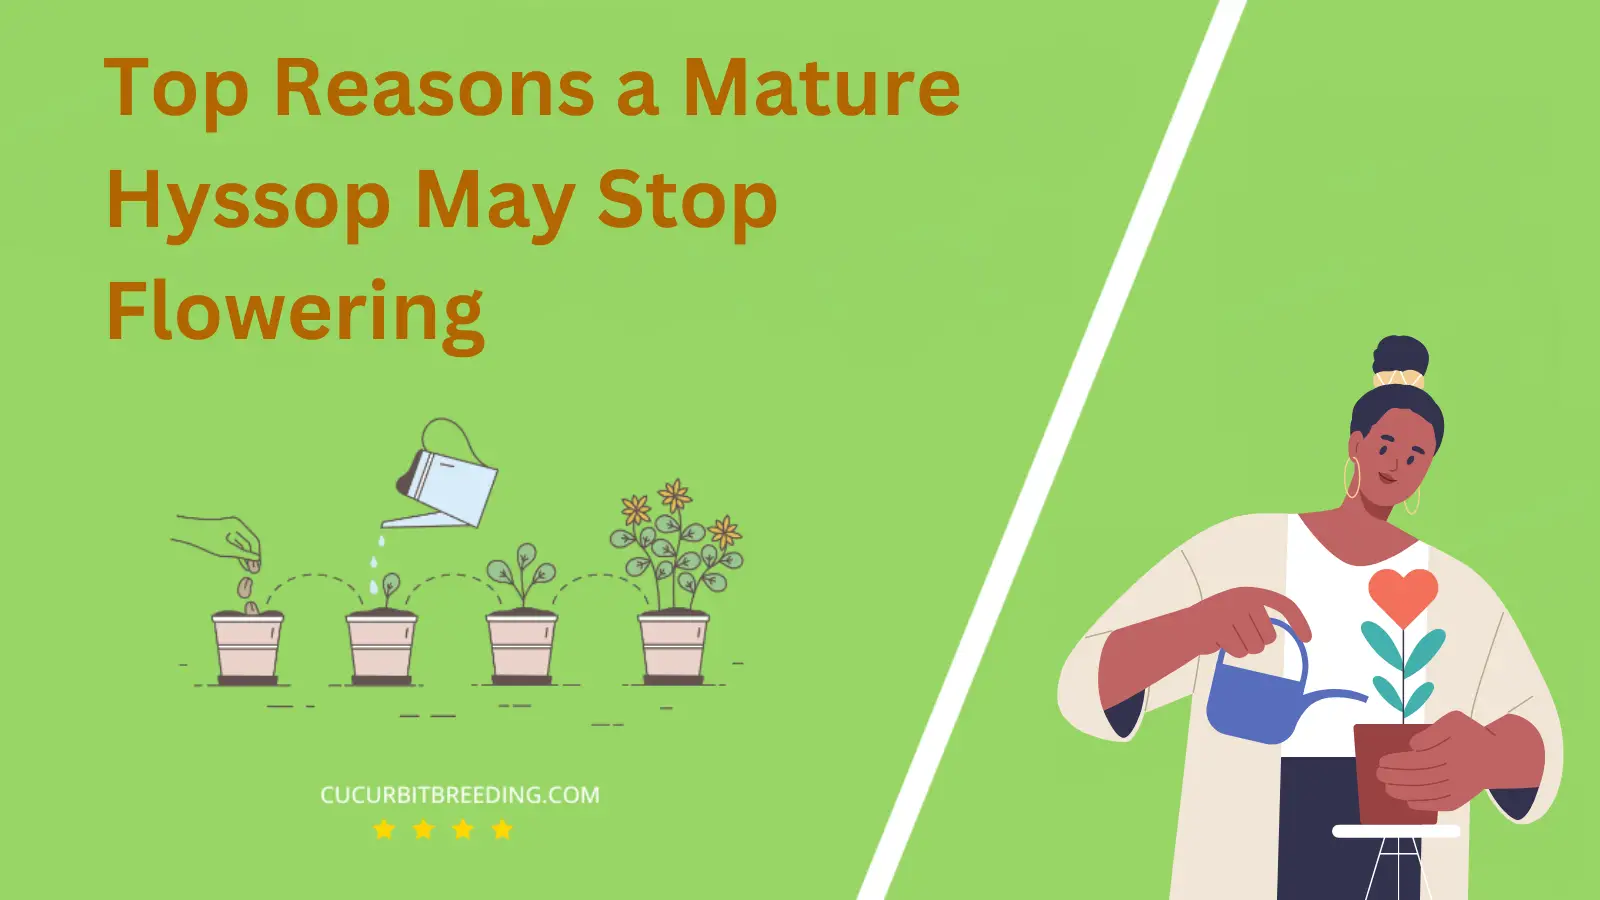 Top Reasons a Mature Hyssop May Stop Flowering